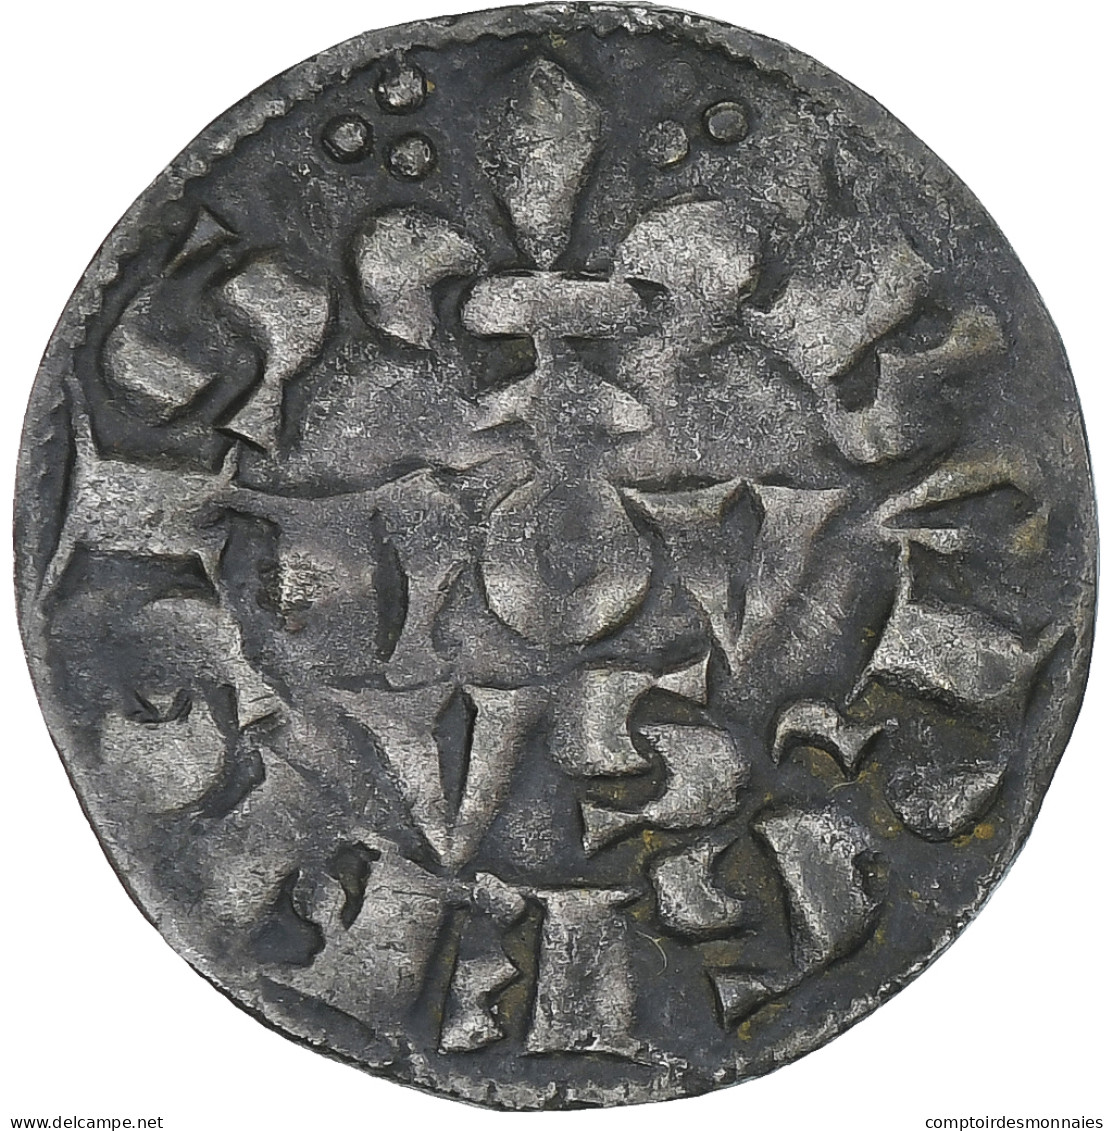 France, Philippe IV Le Bel, Bourgeois Simple, 1311-1314, TTB, Billon - 1285-1314 Philipp IV Der Schöne